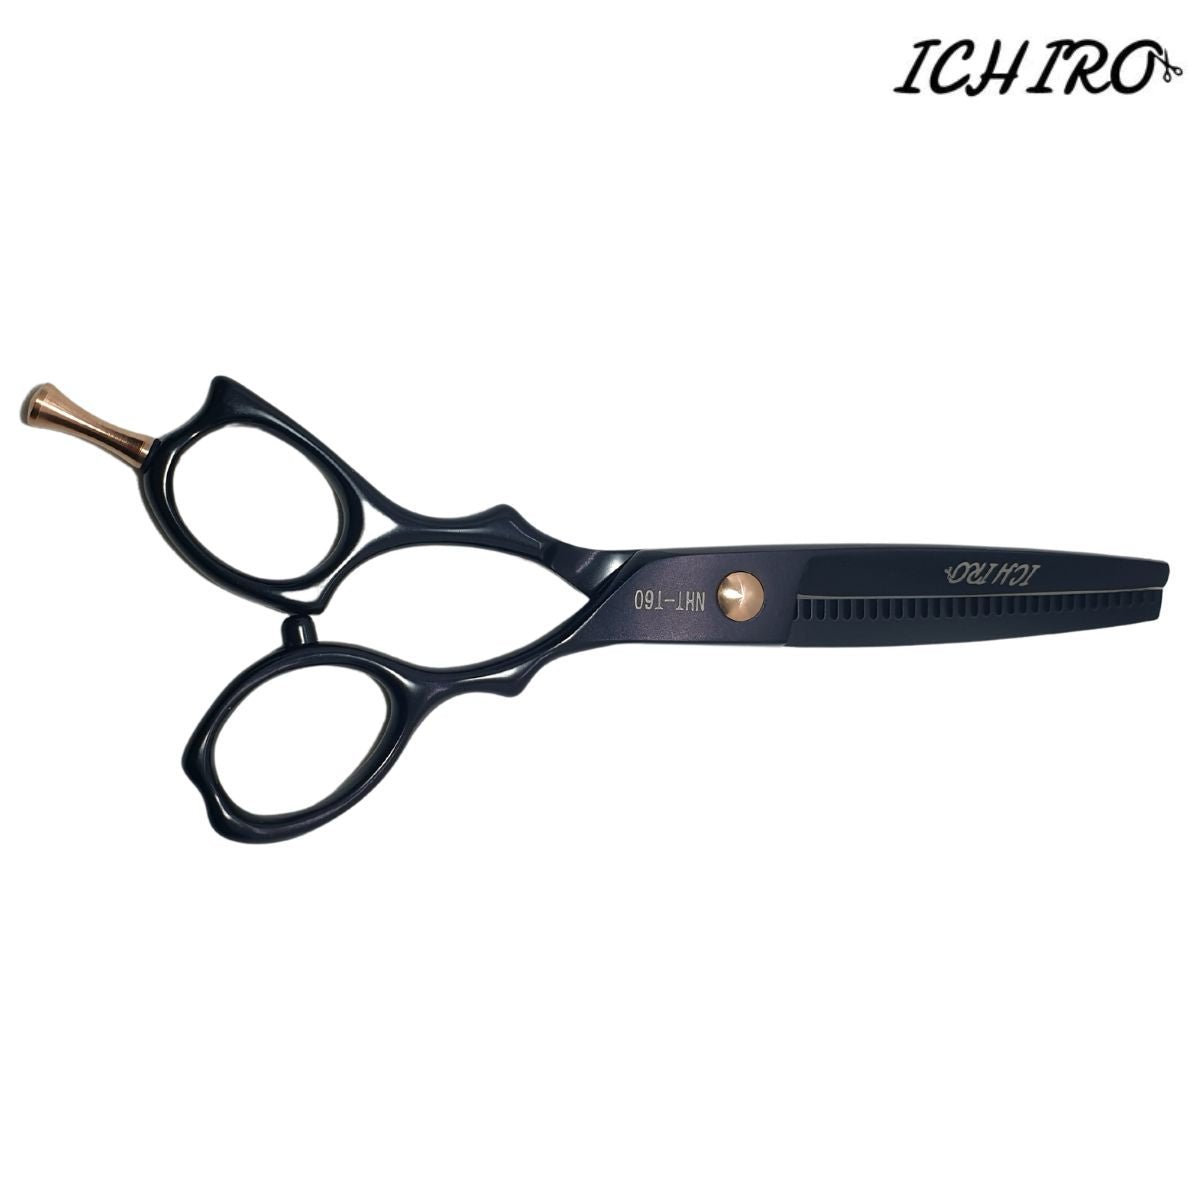 Ichiro Rose Gold Cutting & Thinning Scissors Set - Japan Scissors USA